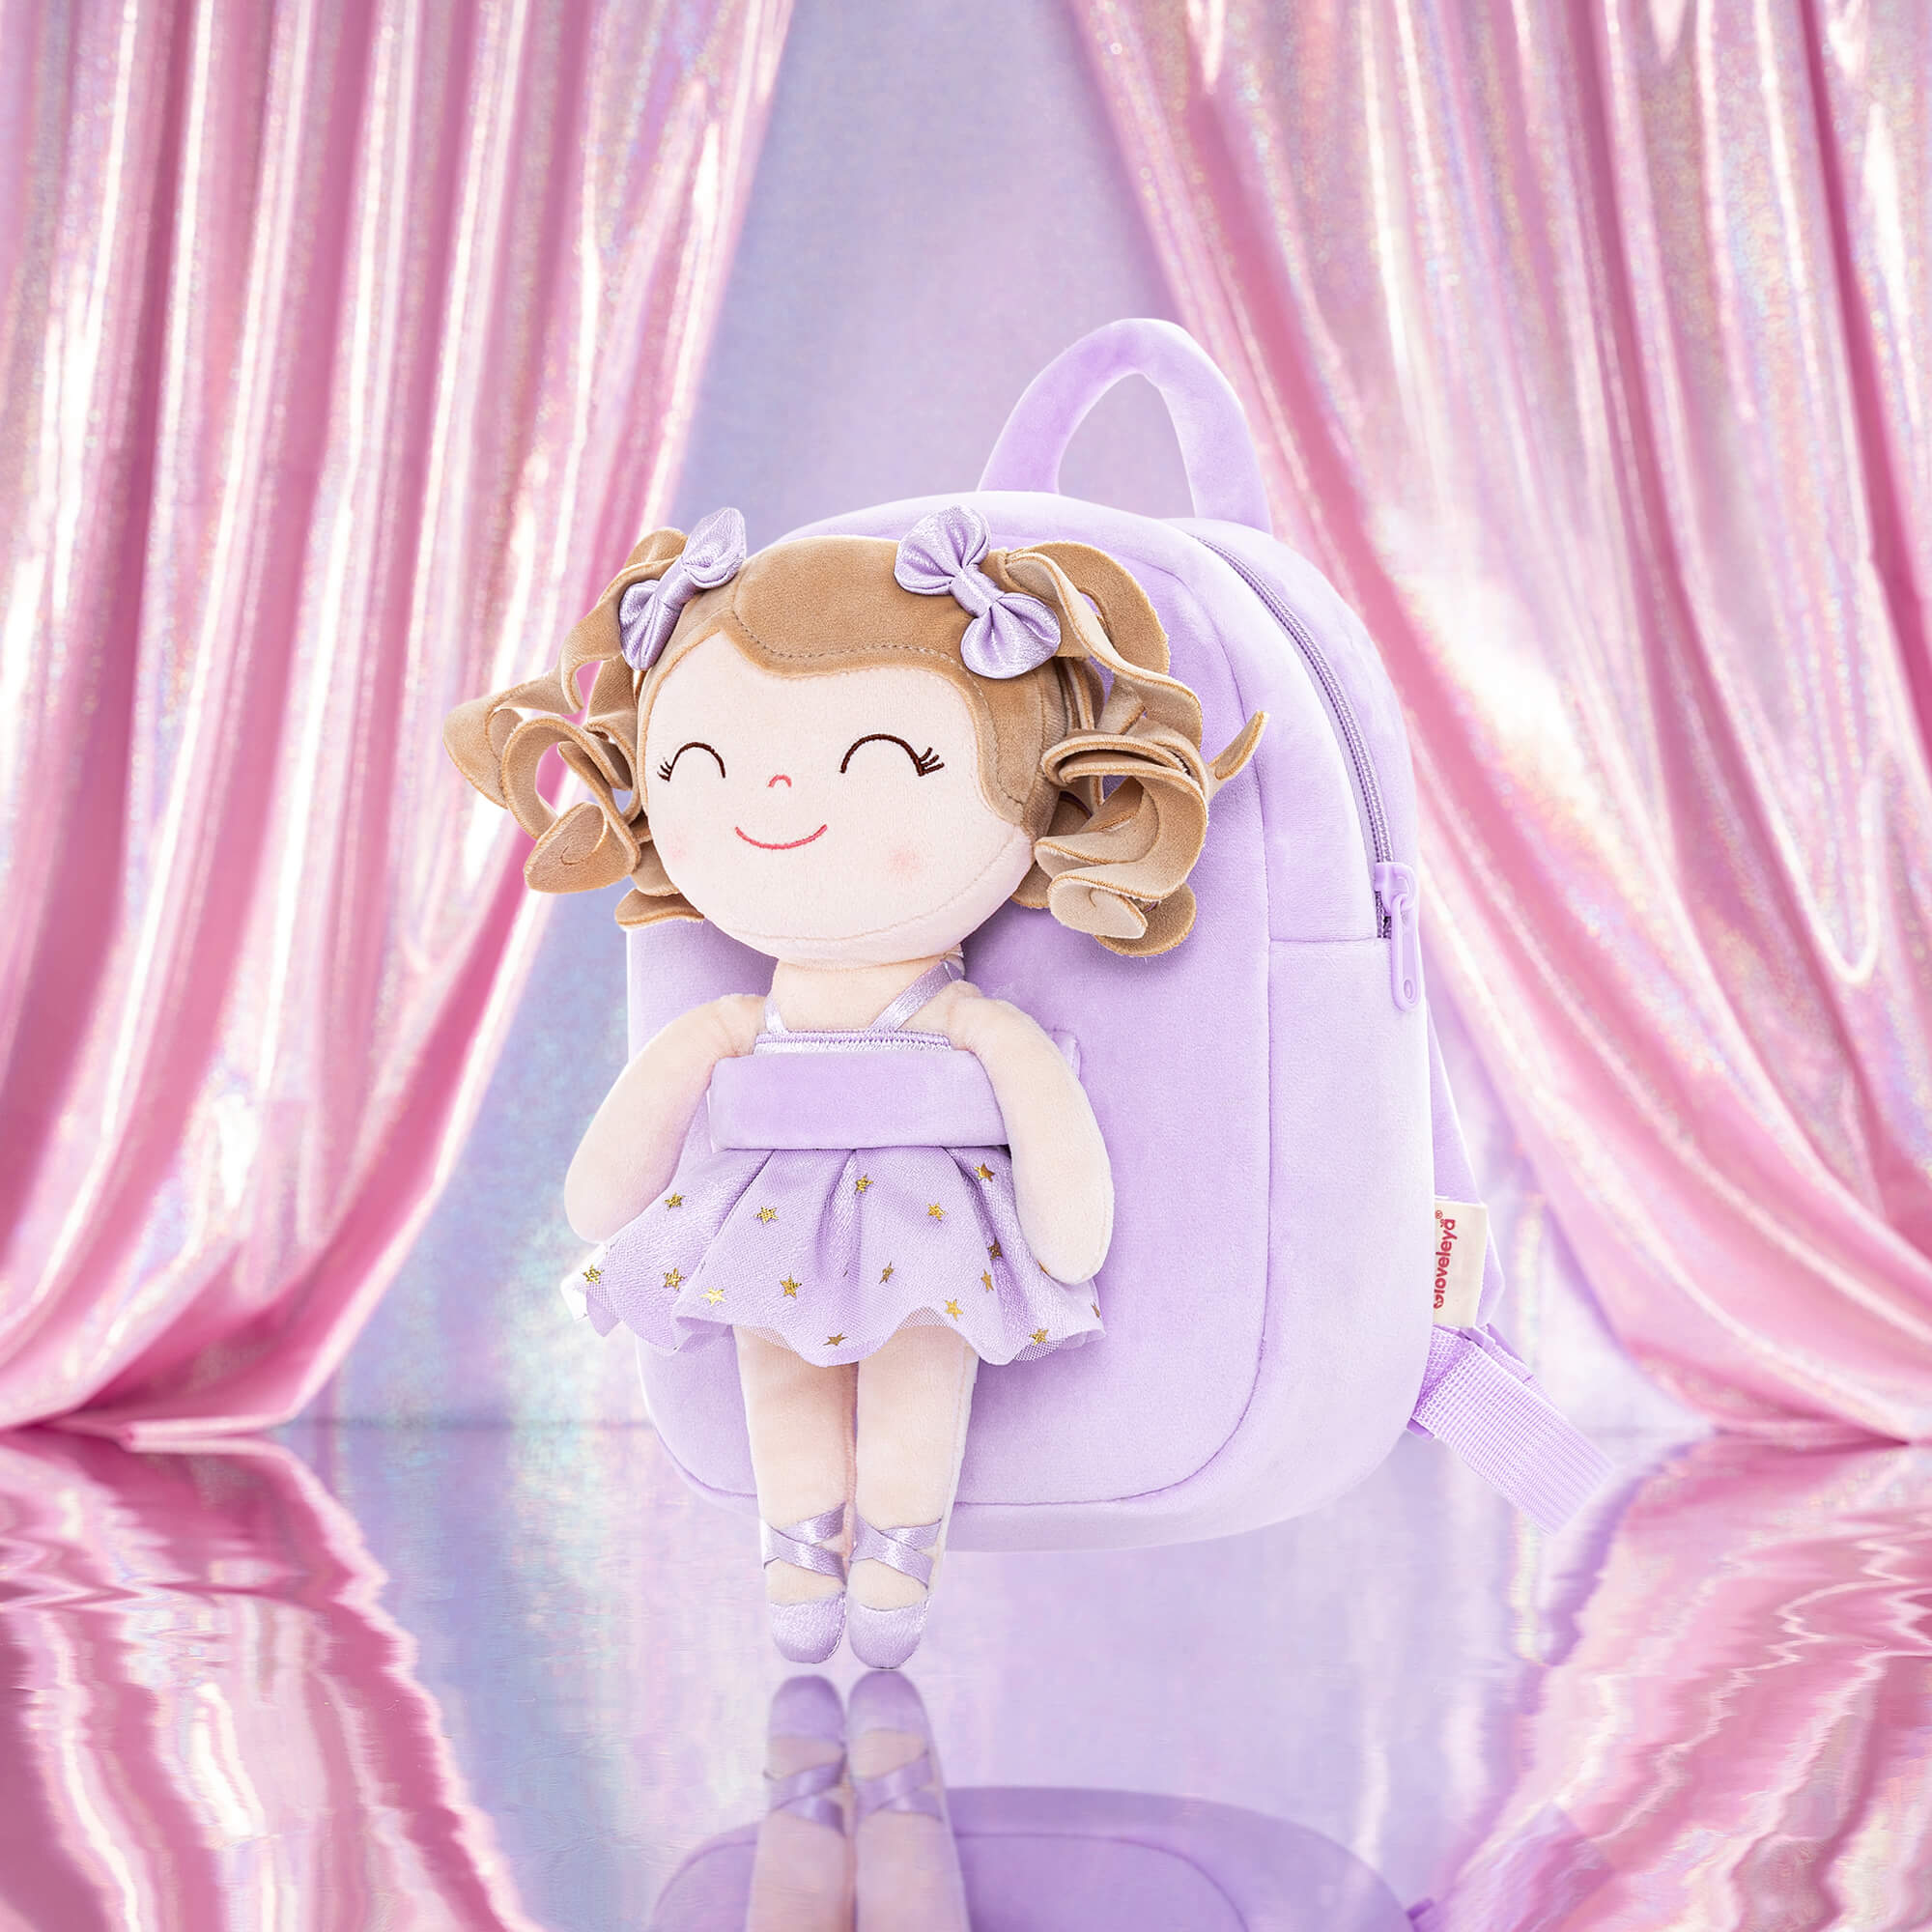 Gloveleya 9-inch Personalized Plush Curly Ballet Girl Dolls Backpack Purple Ballet Dream